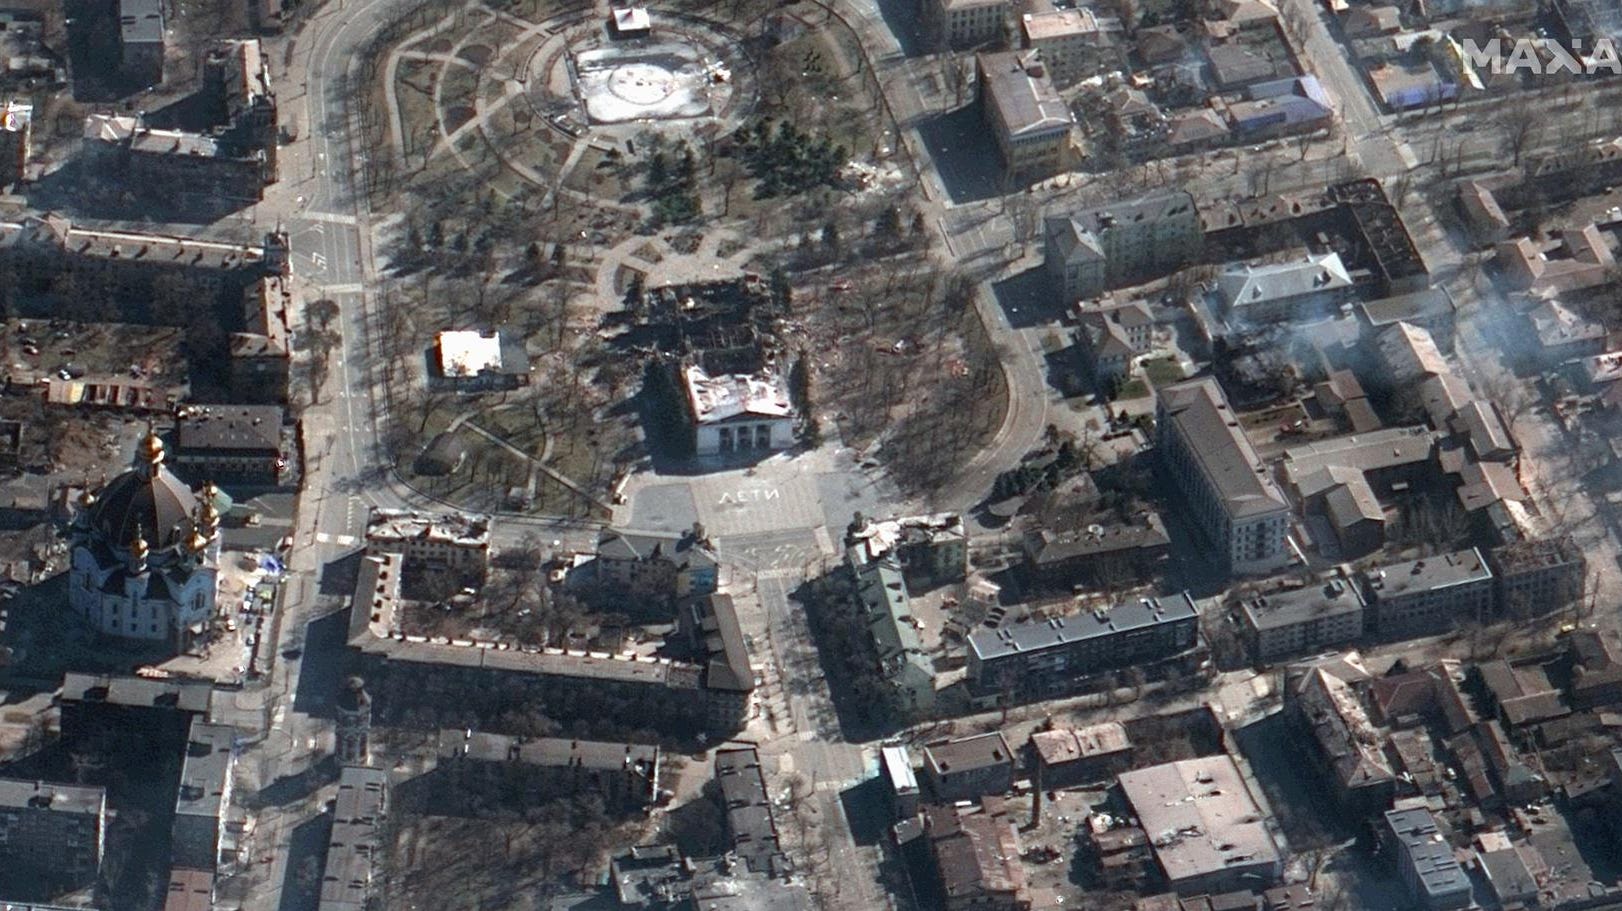 Mariupol Theater Bombing Killed 300, Ukrainian Officials Estimate